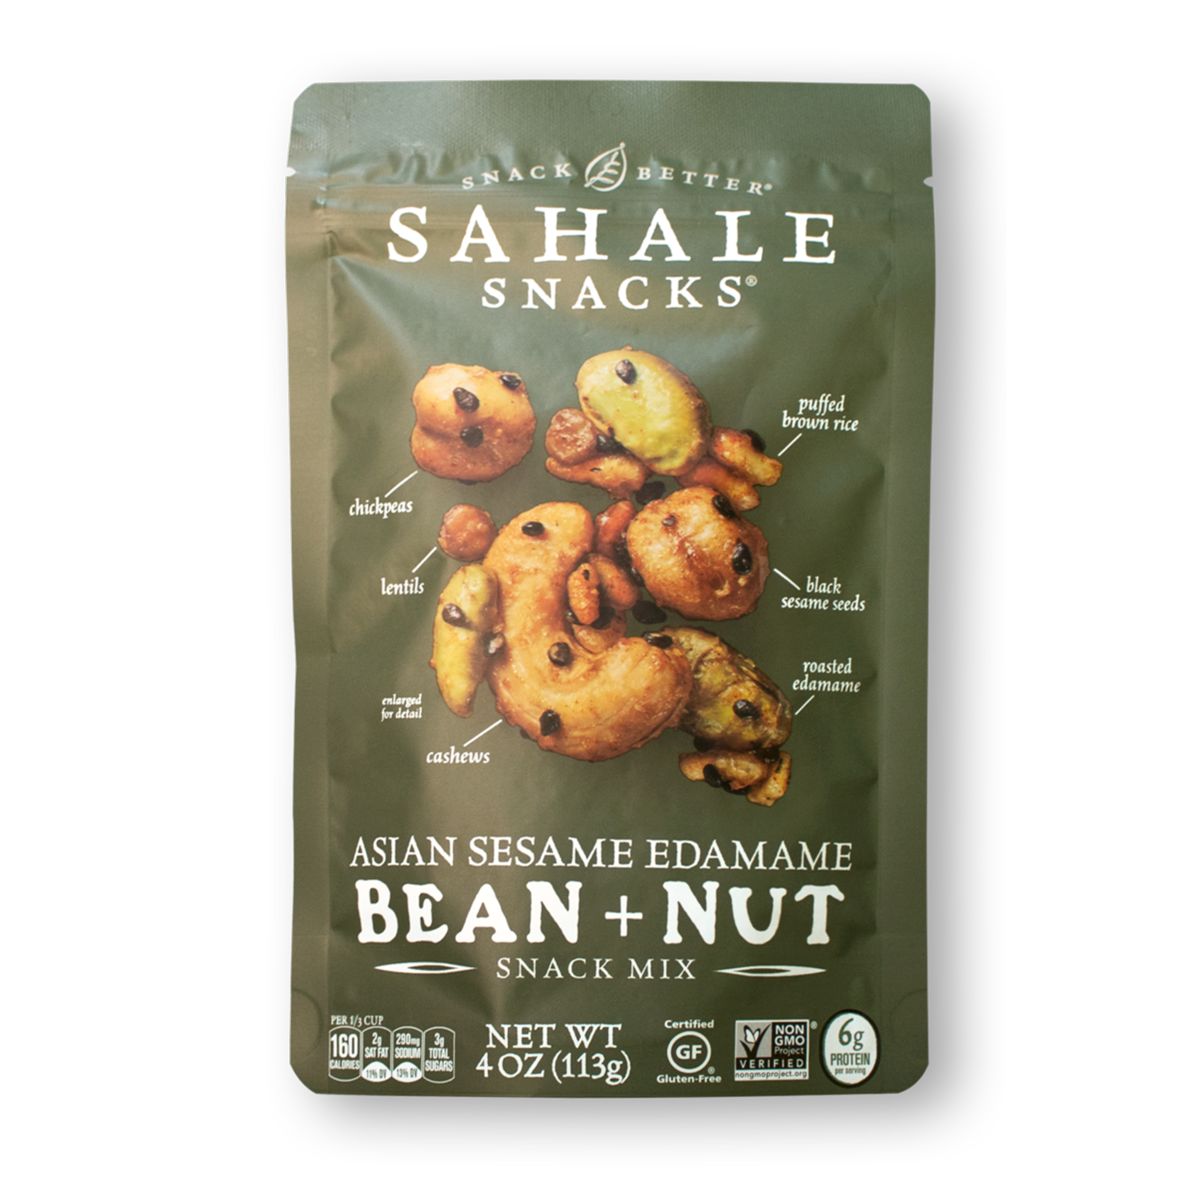 asian-sesame-edamame-bean-nut-snack-mix-or-sahale-snacks-r